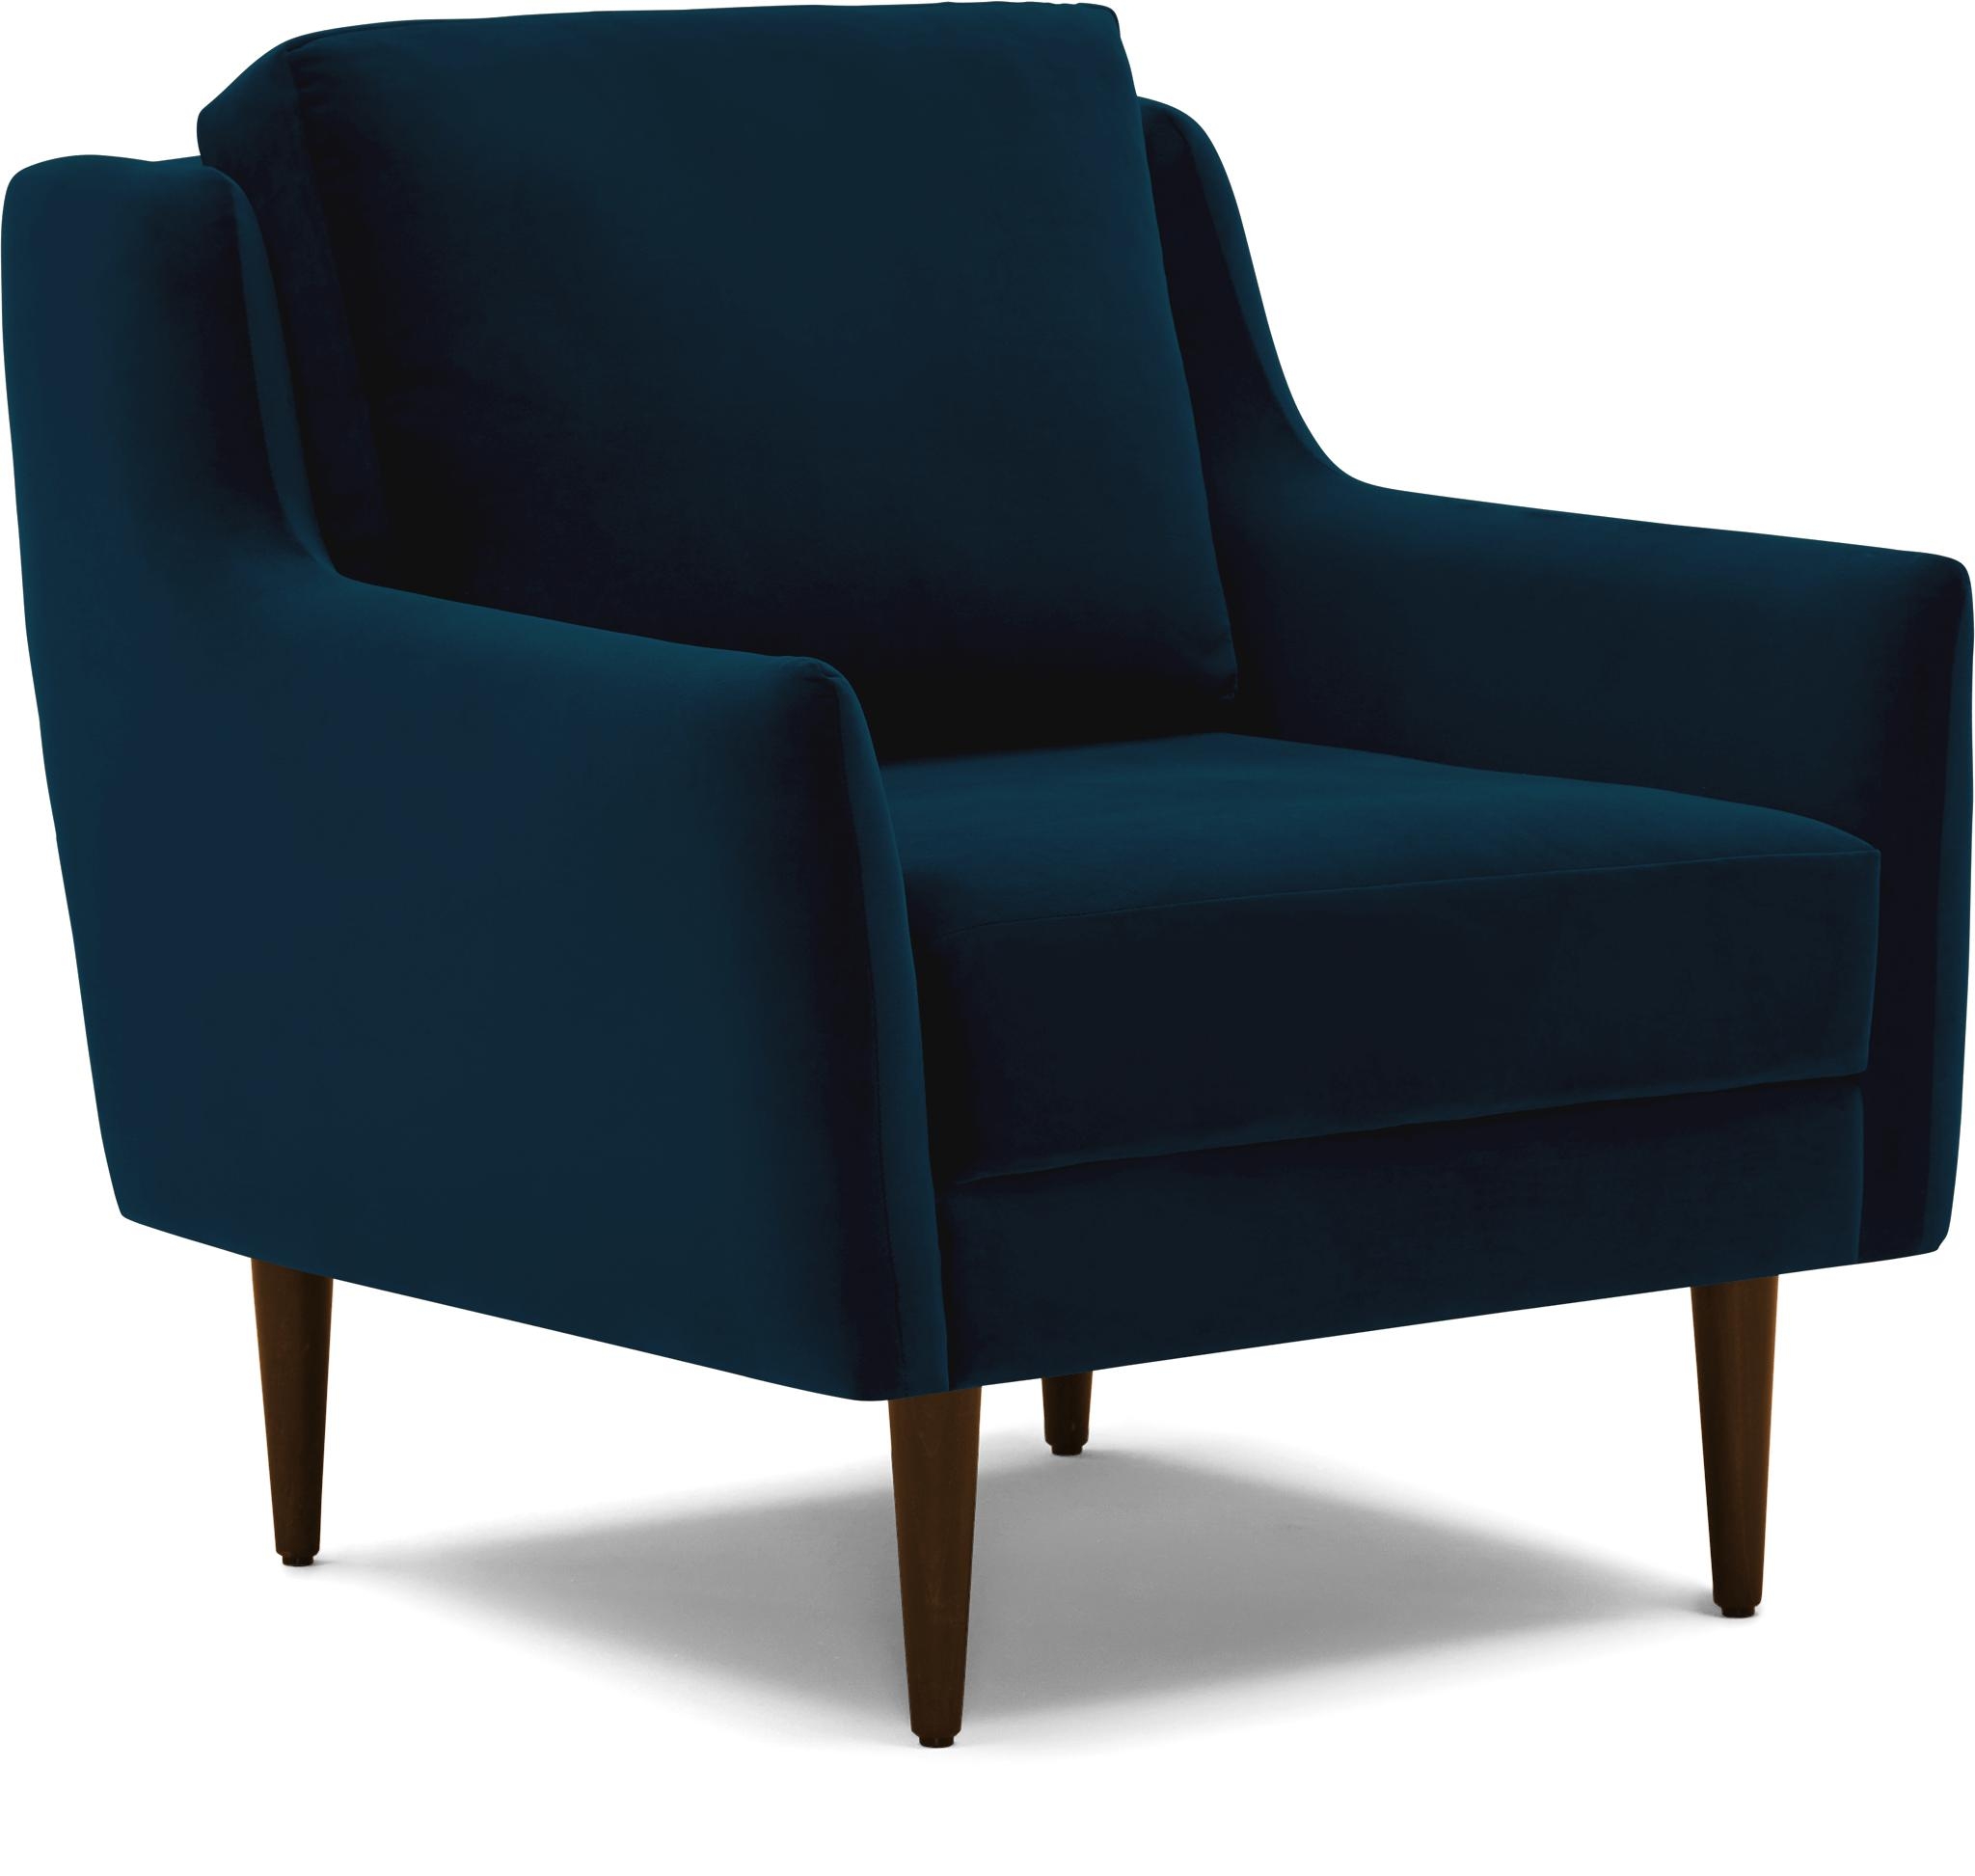 Blue Bell Mid Century Modern Chair - Key Largo Zenith Teal - Mocha - Image 1